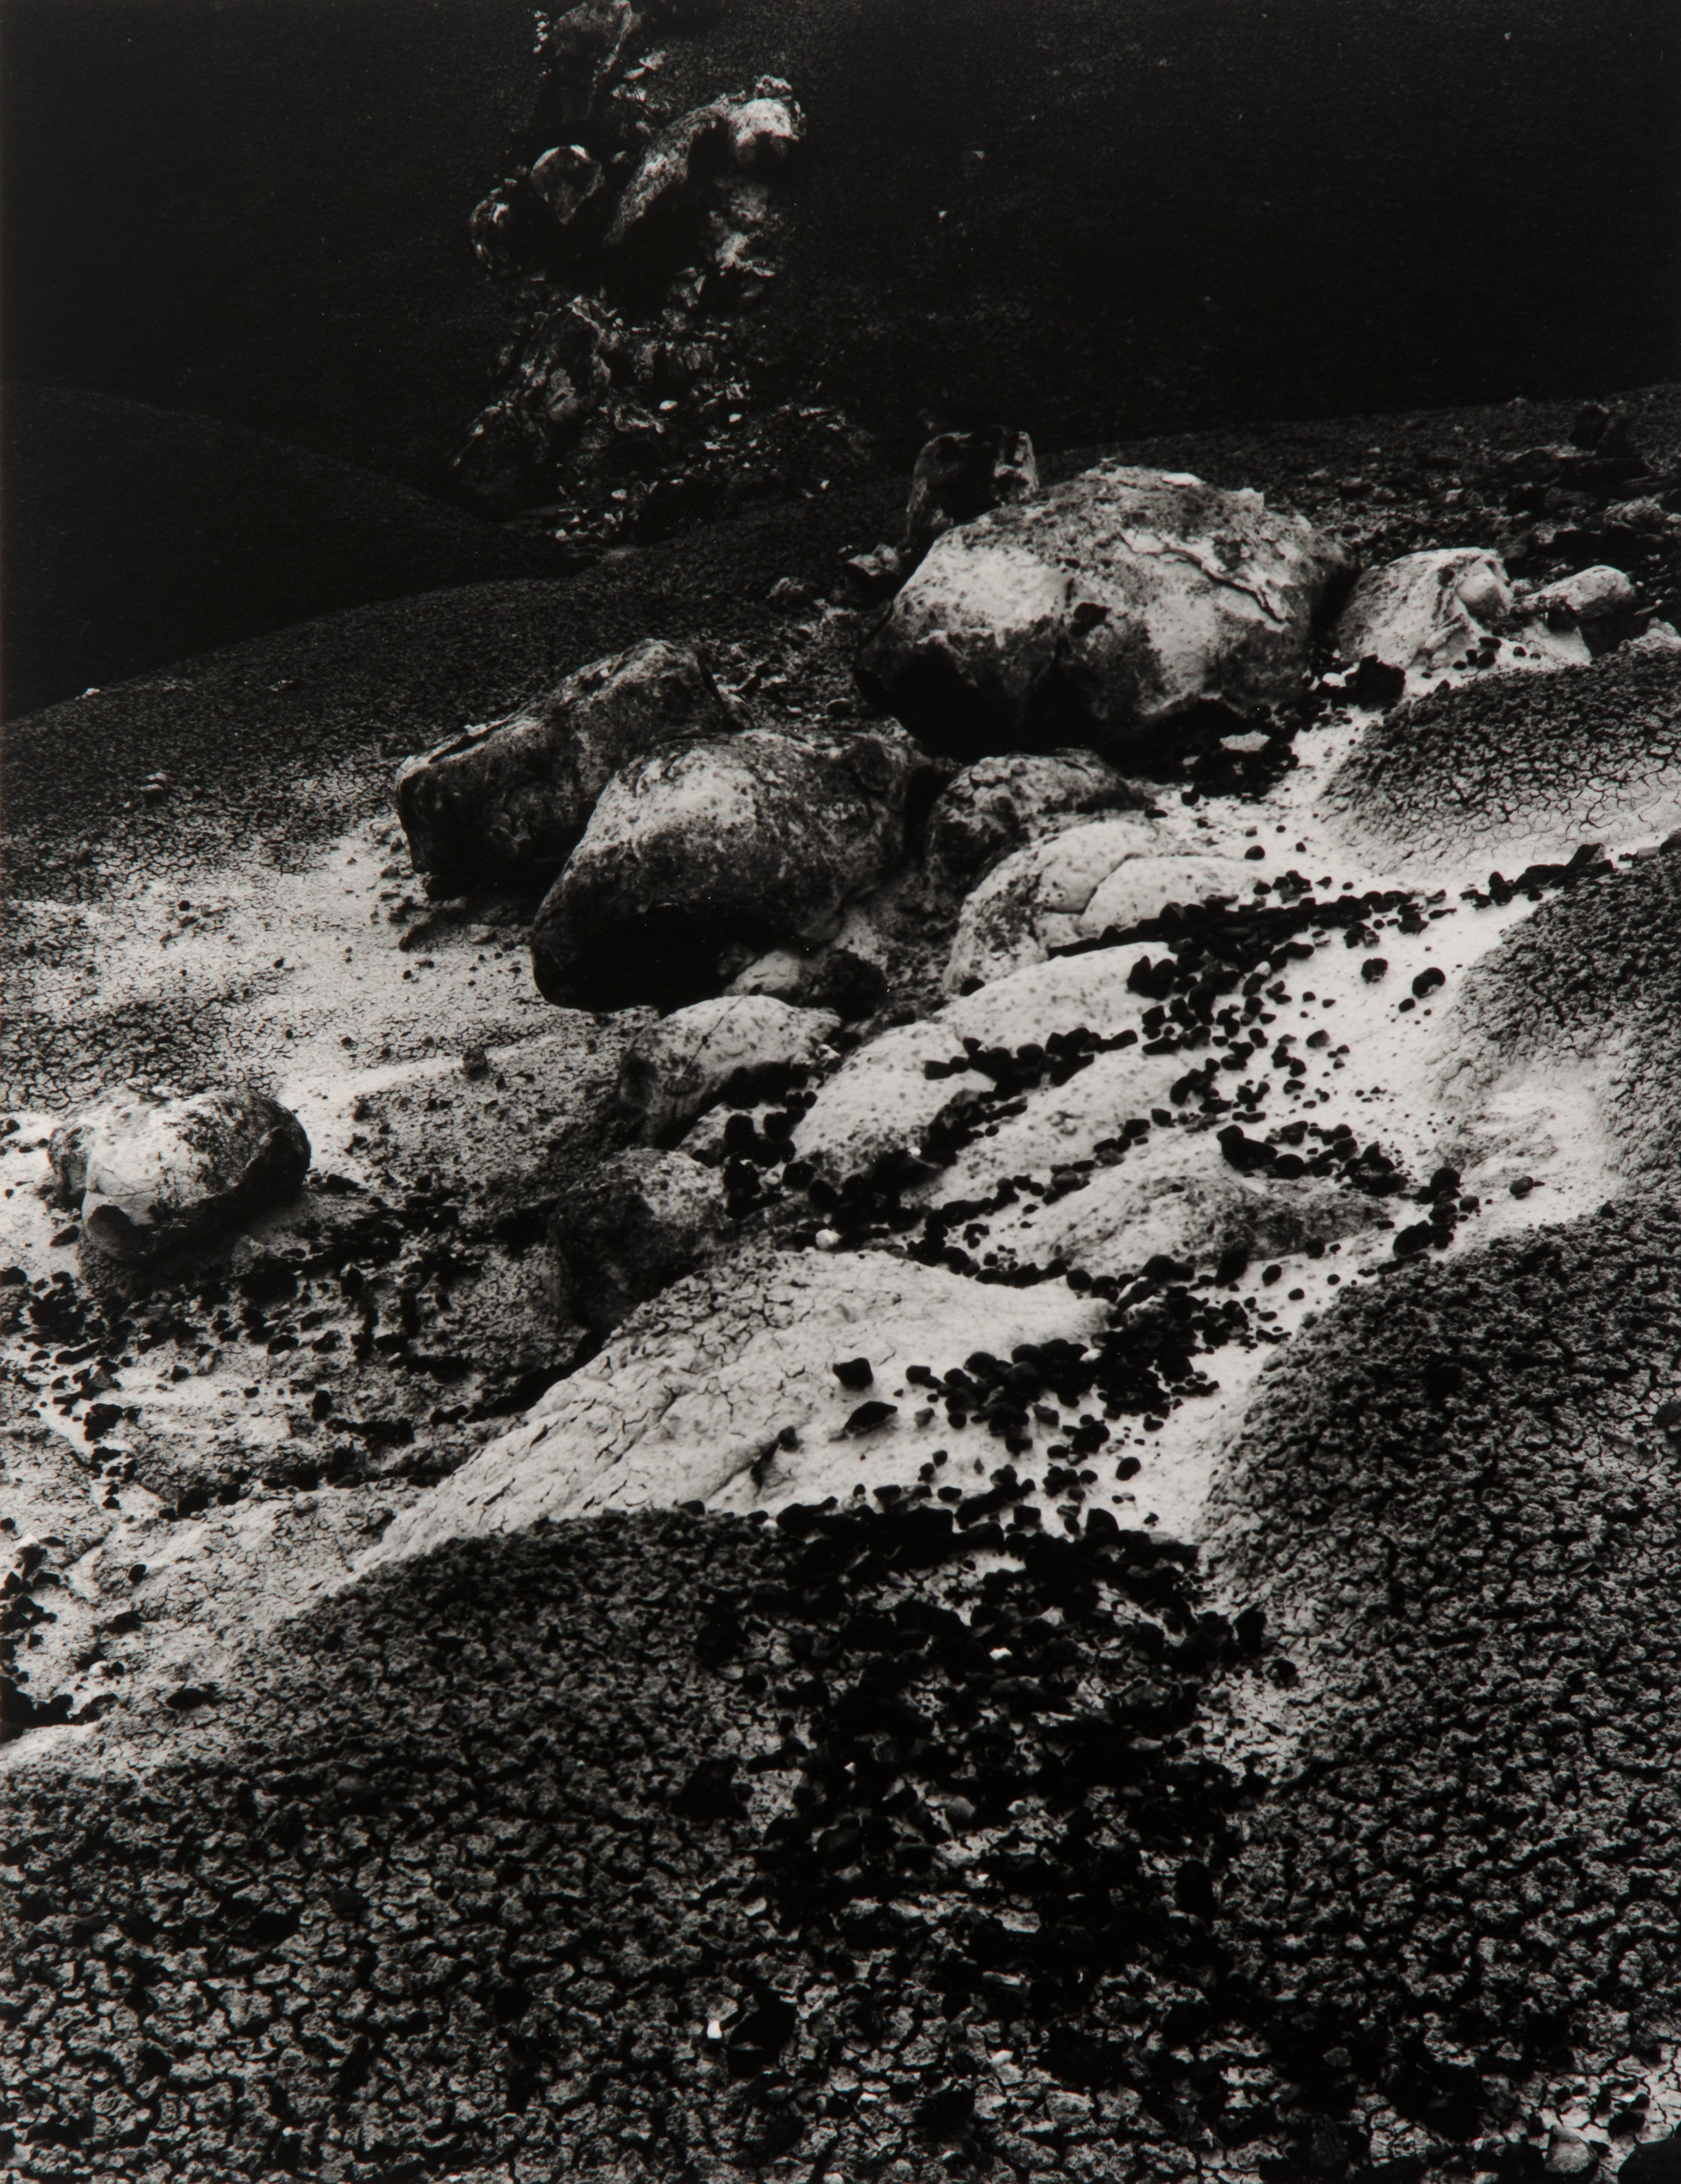 Ritual Stones, Notom, Utah, 1963 from the Jupiter Portfolio